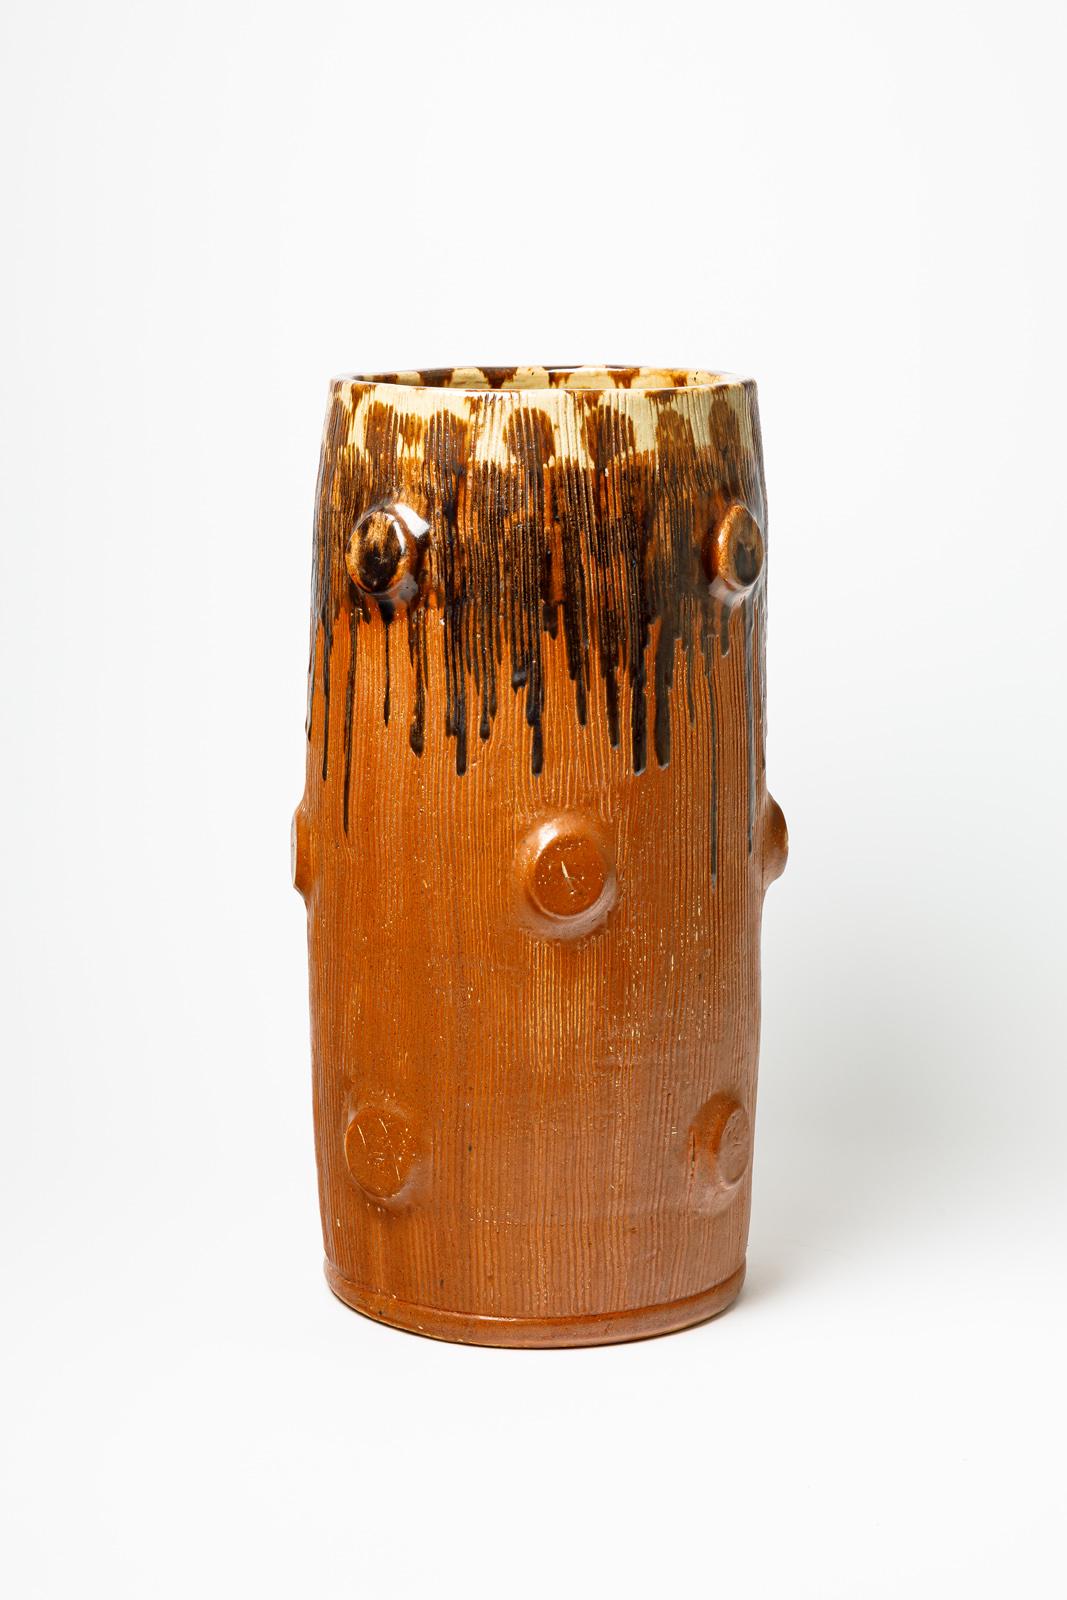 French Orange and brown glazed ceramic vase by Joseph Talbot, circa 1940-1950. For Sale